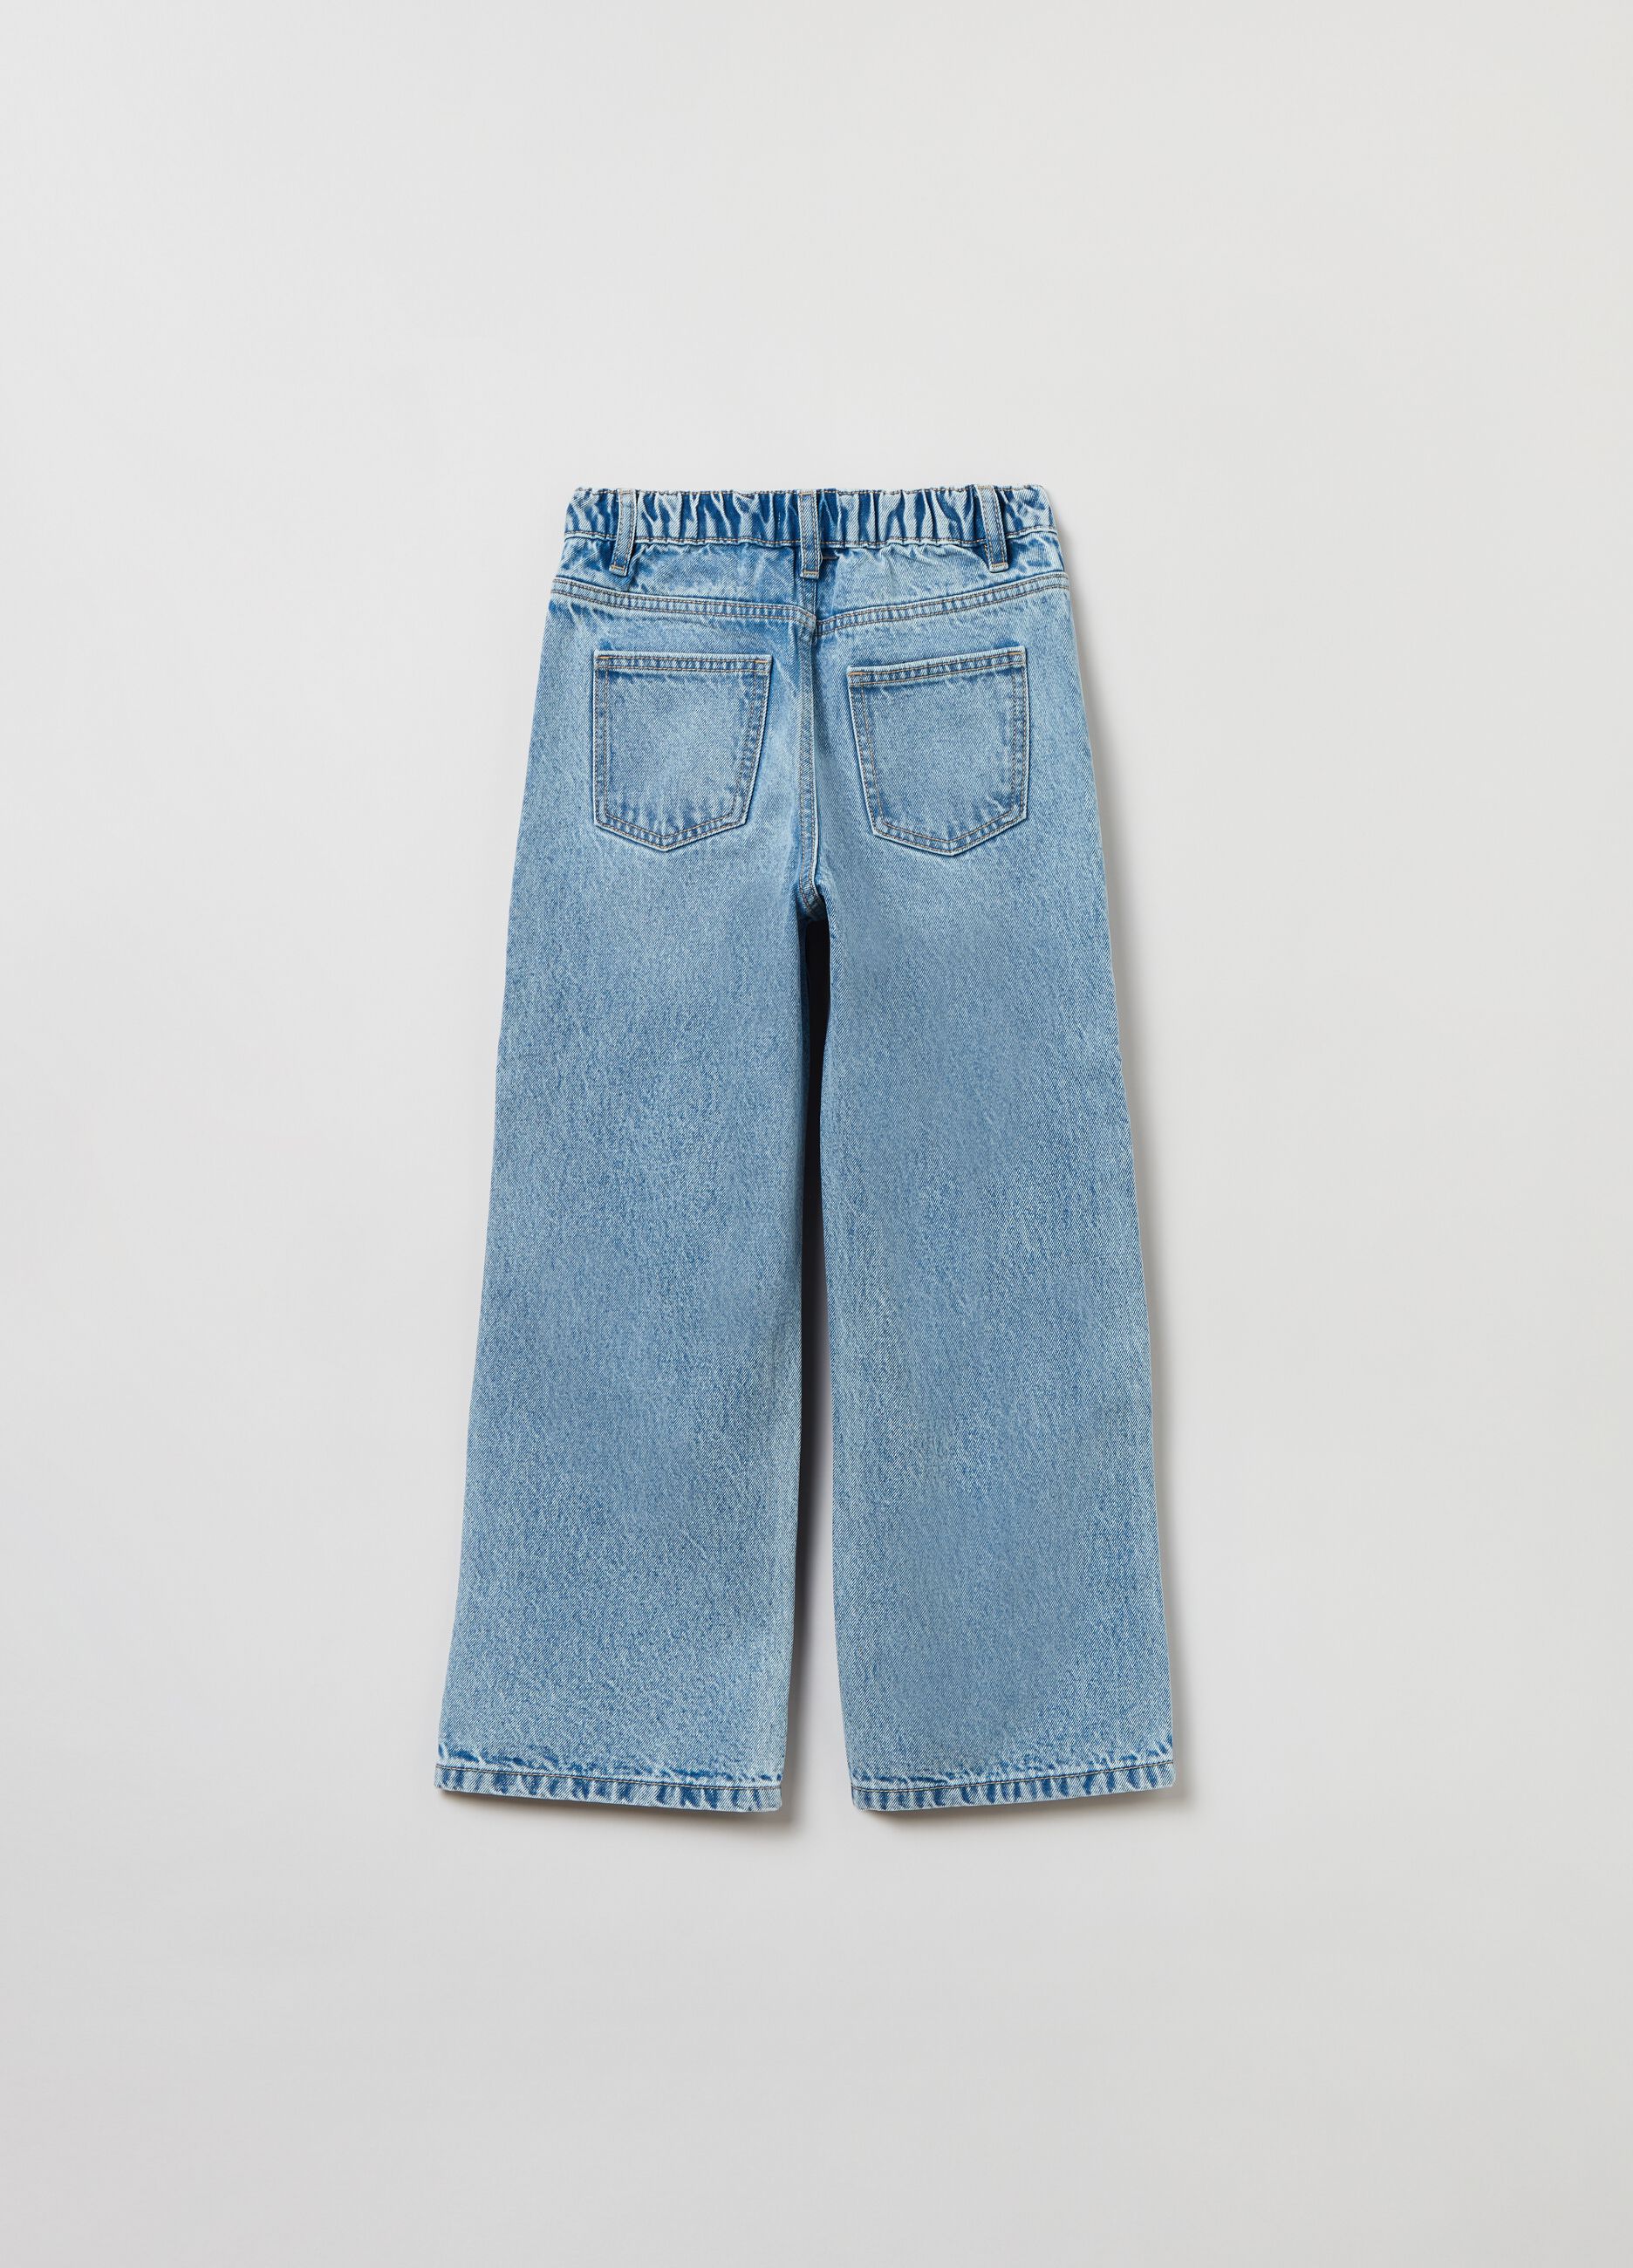 Five-pocket, culotte jeans.